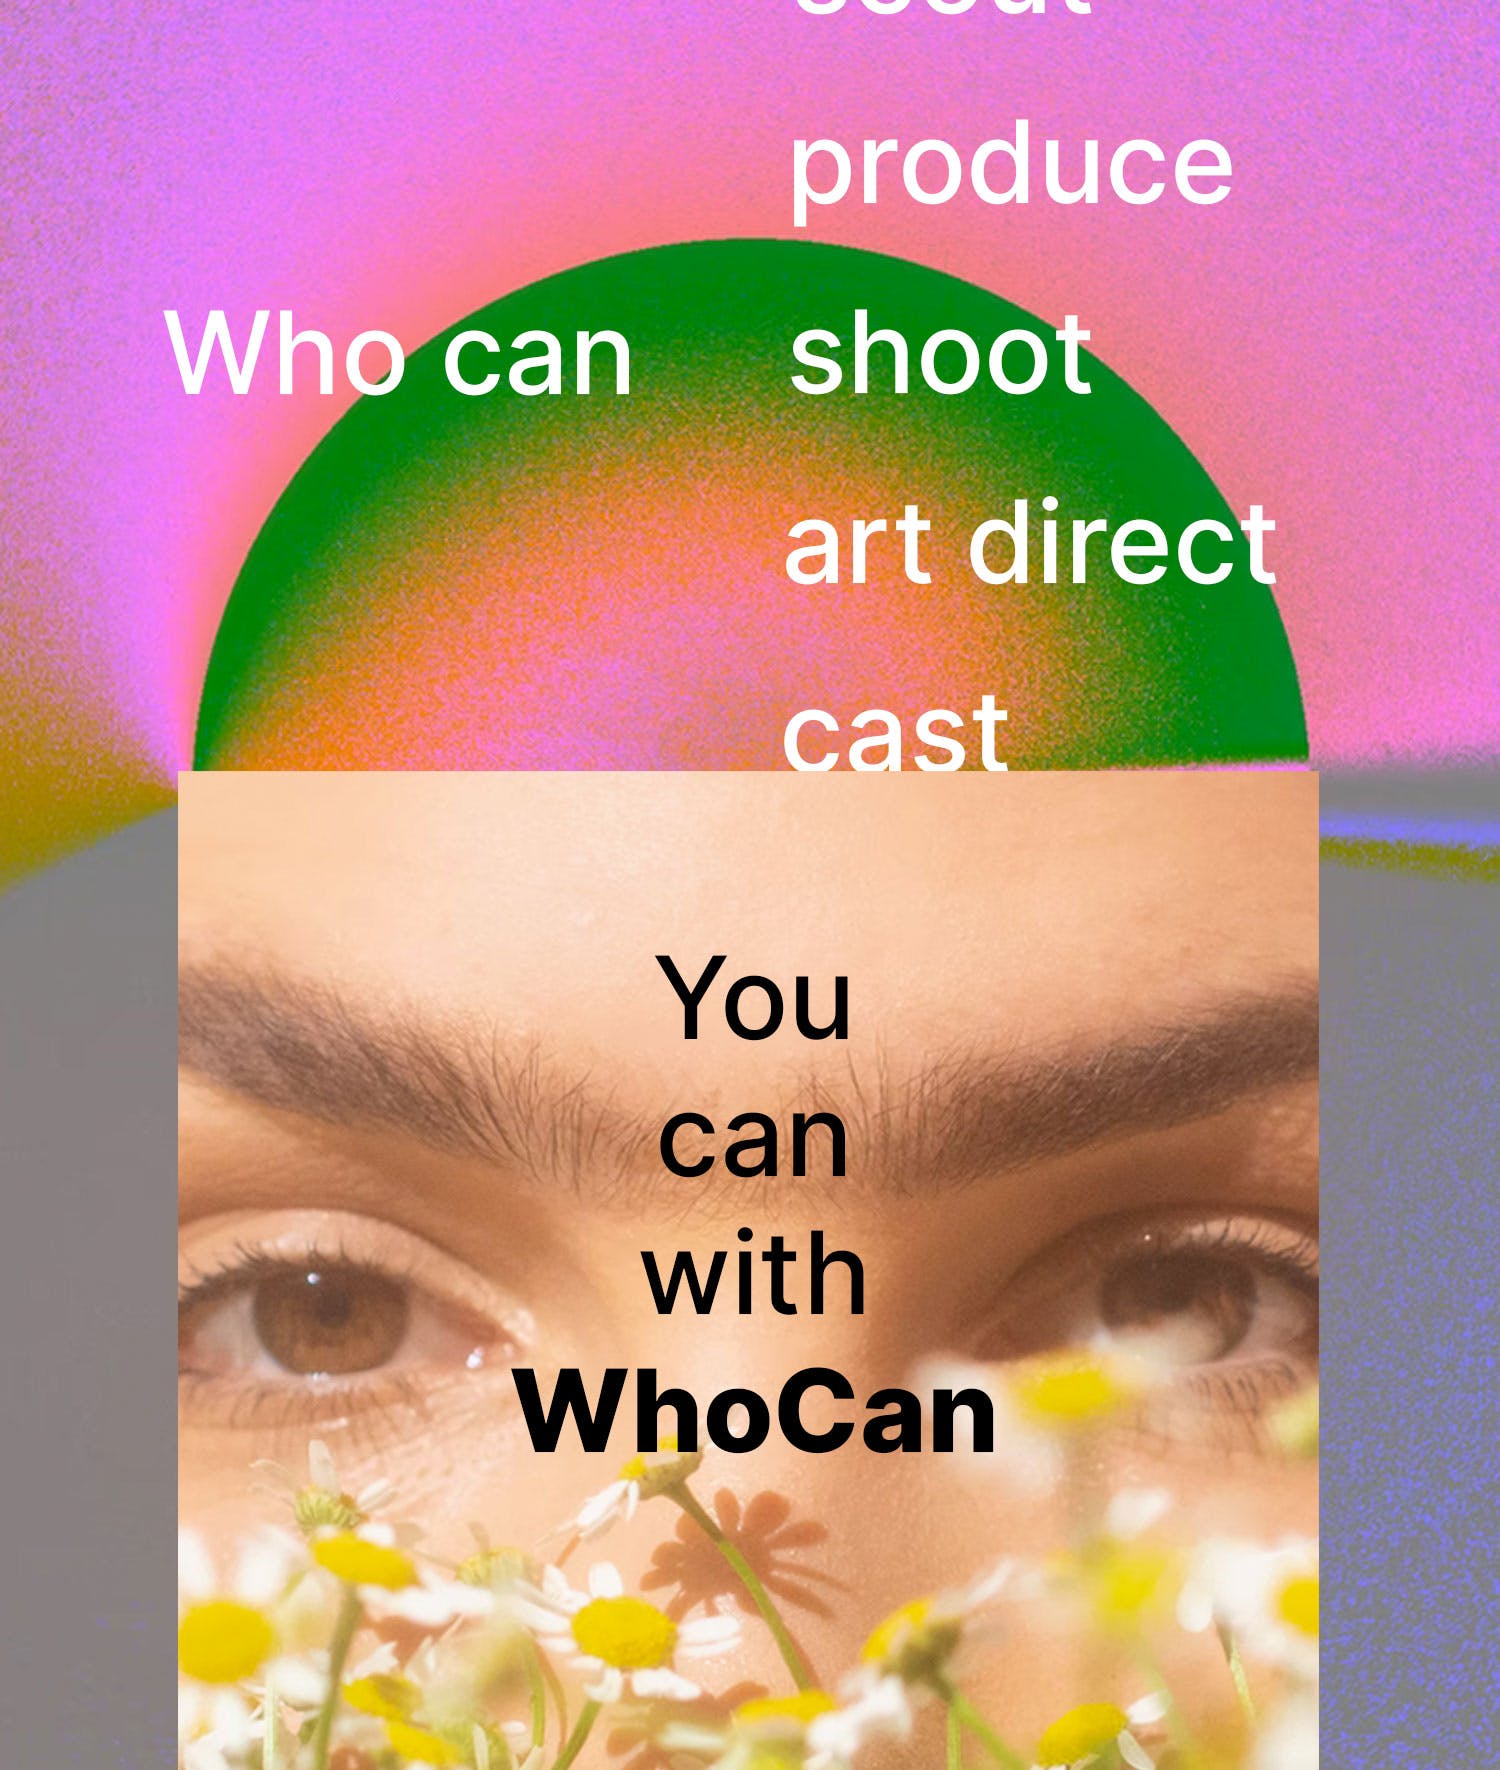 WhoCan media 2